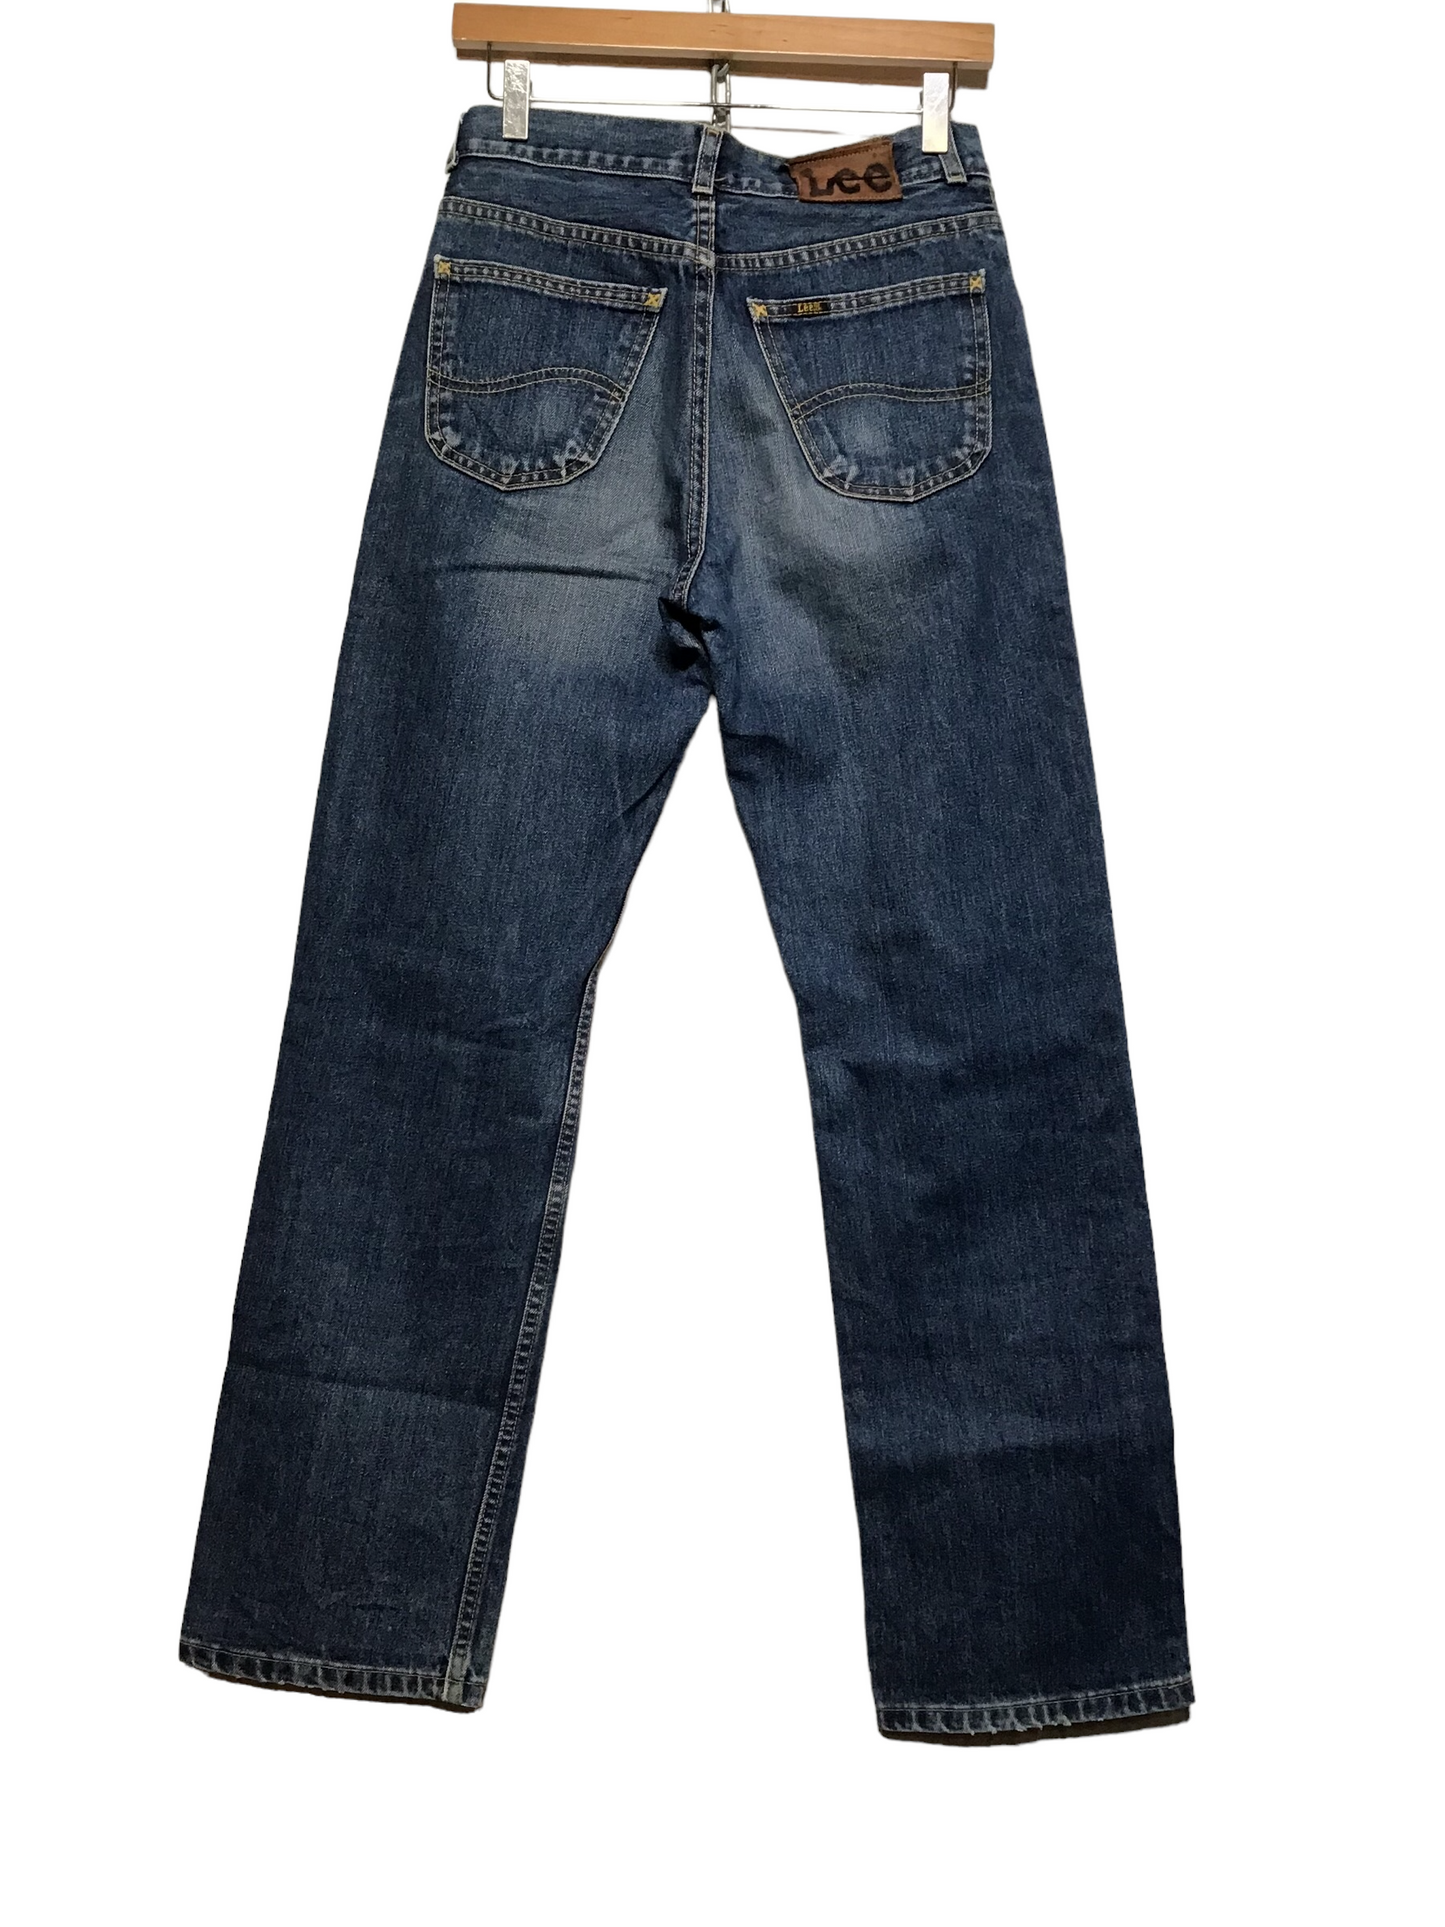 Lee Dark Denim Jeans (29X31)